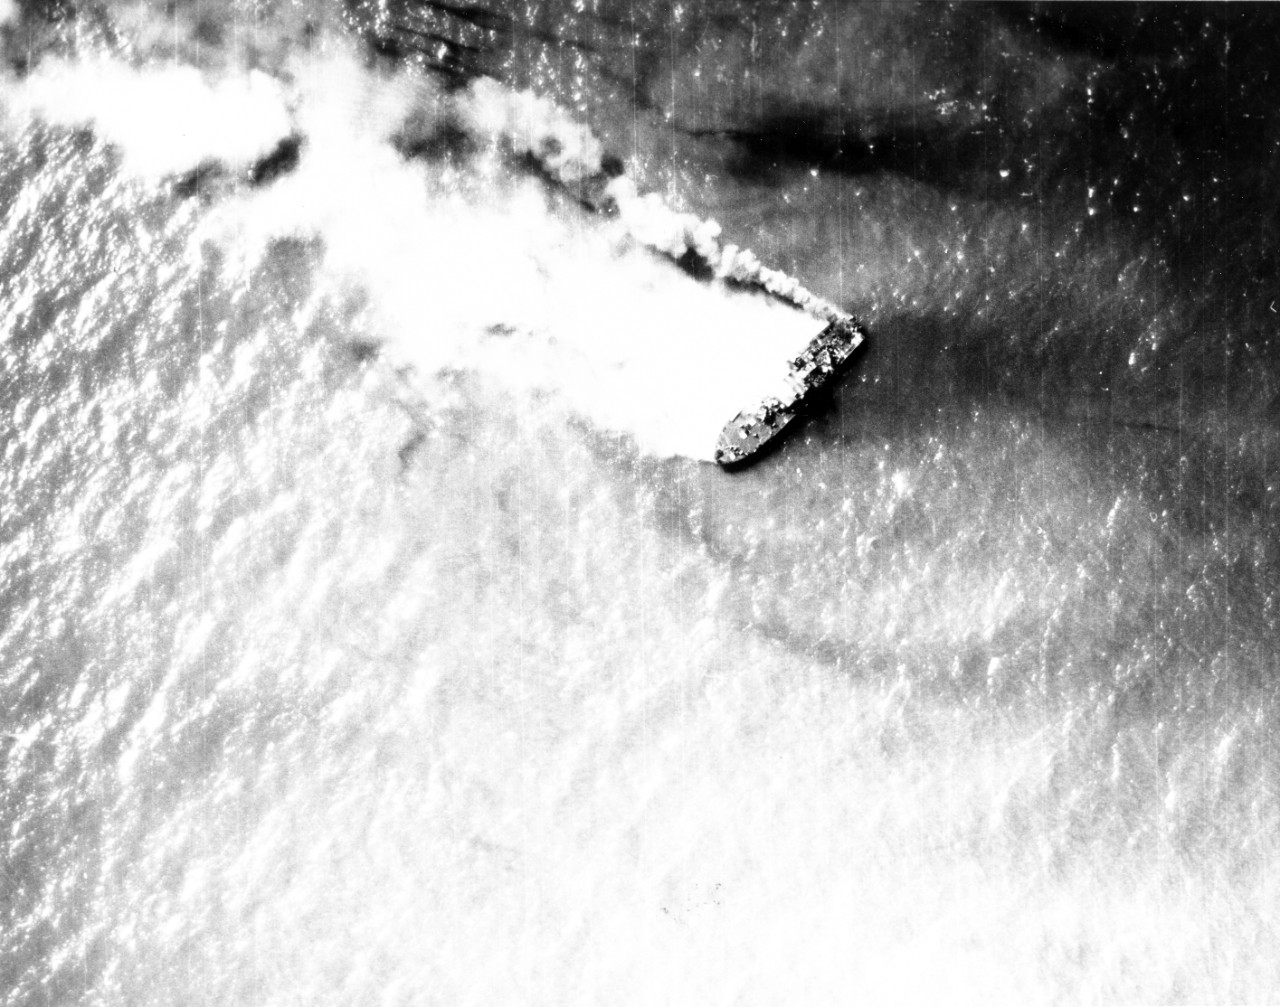 Tonkin Gulf incident, August 1964